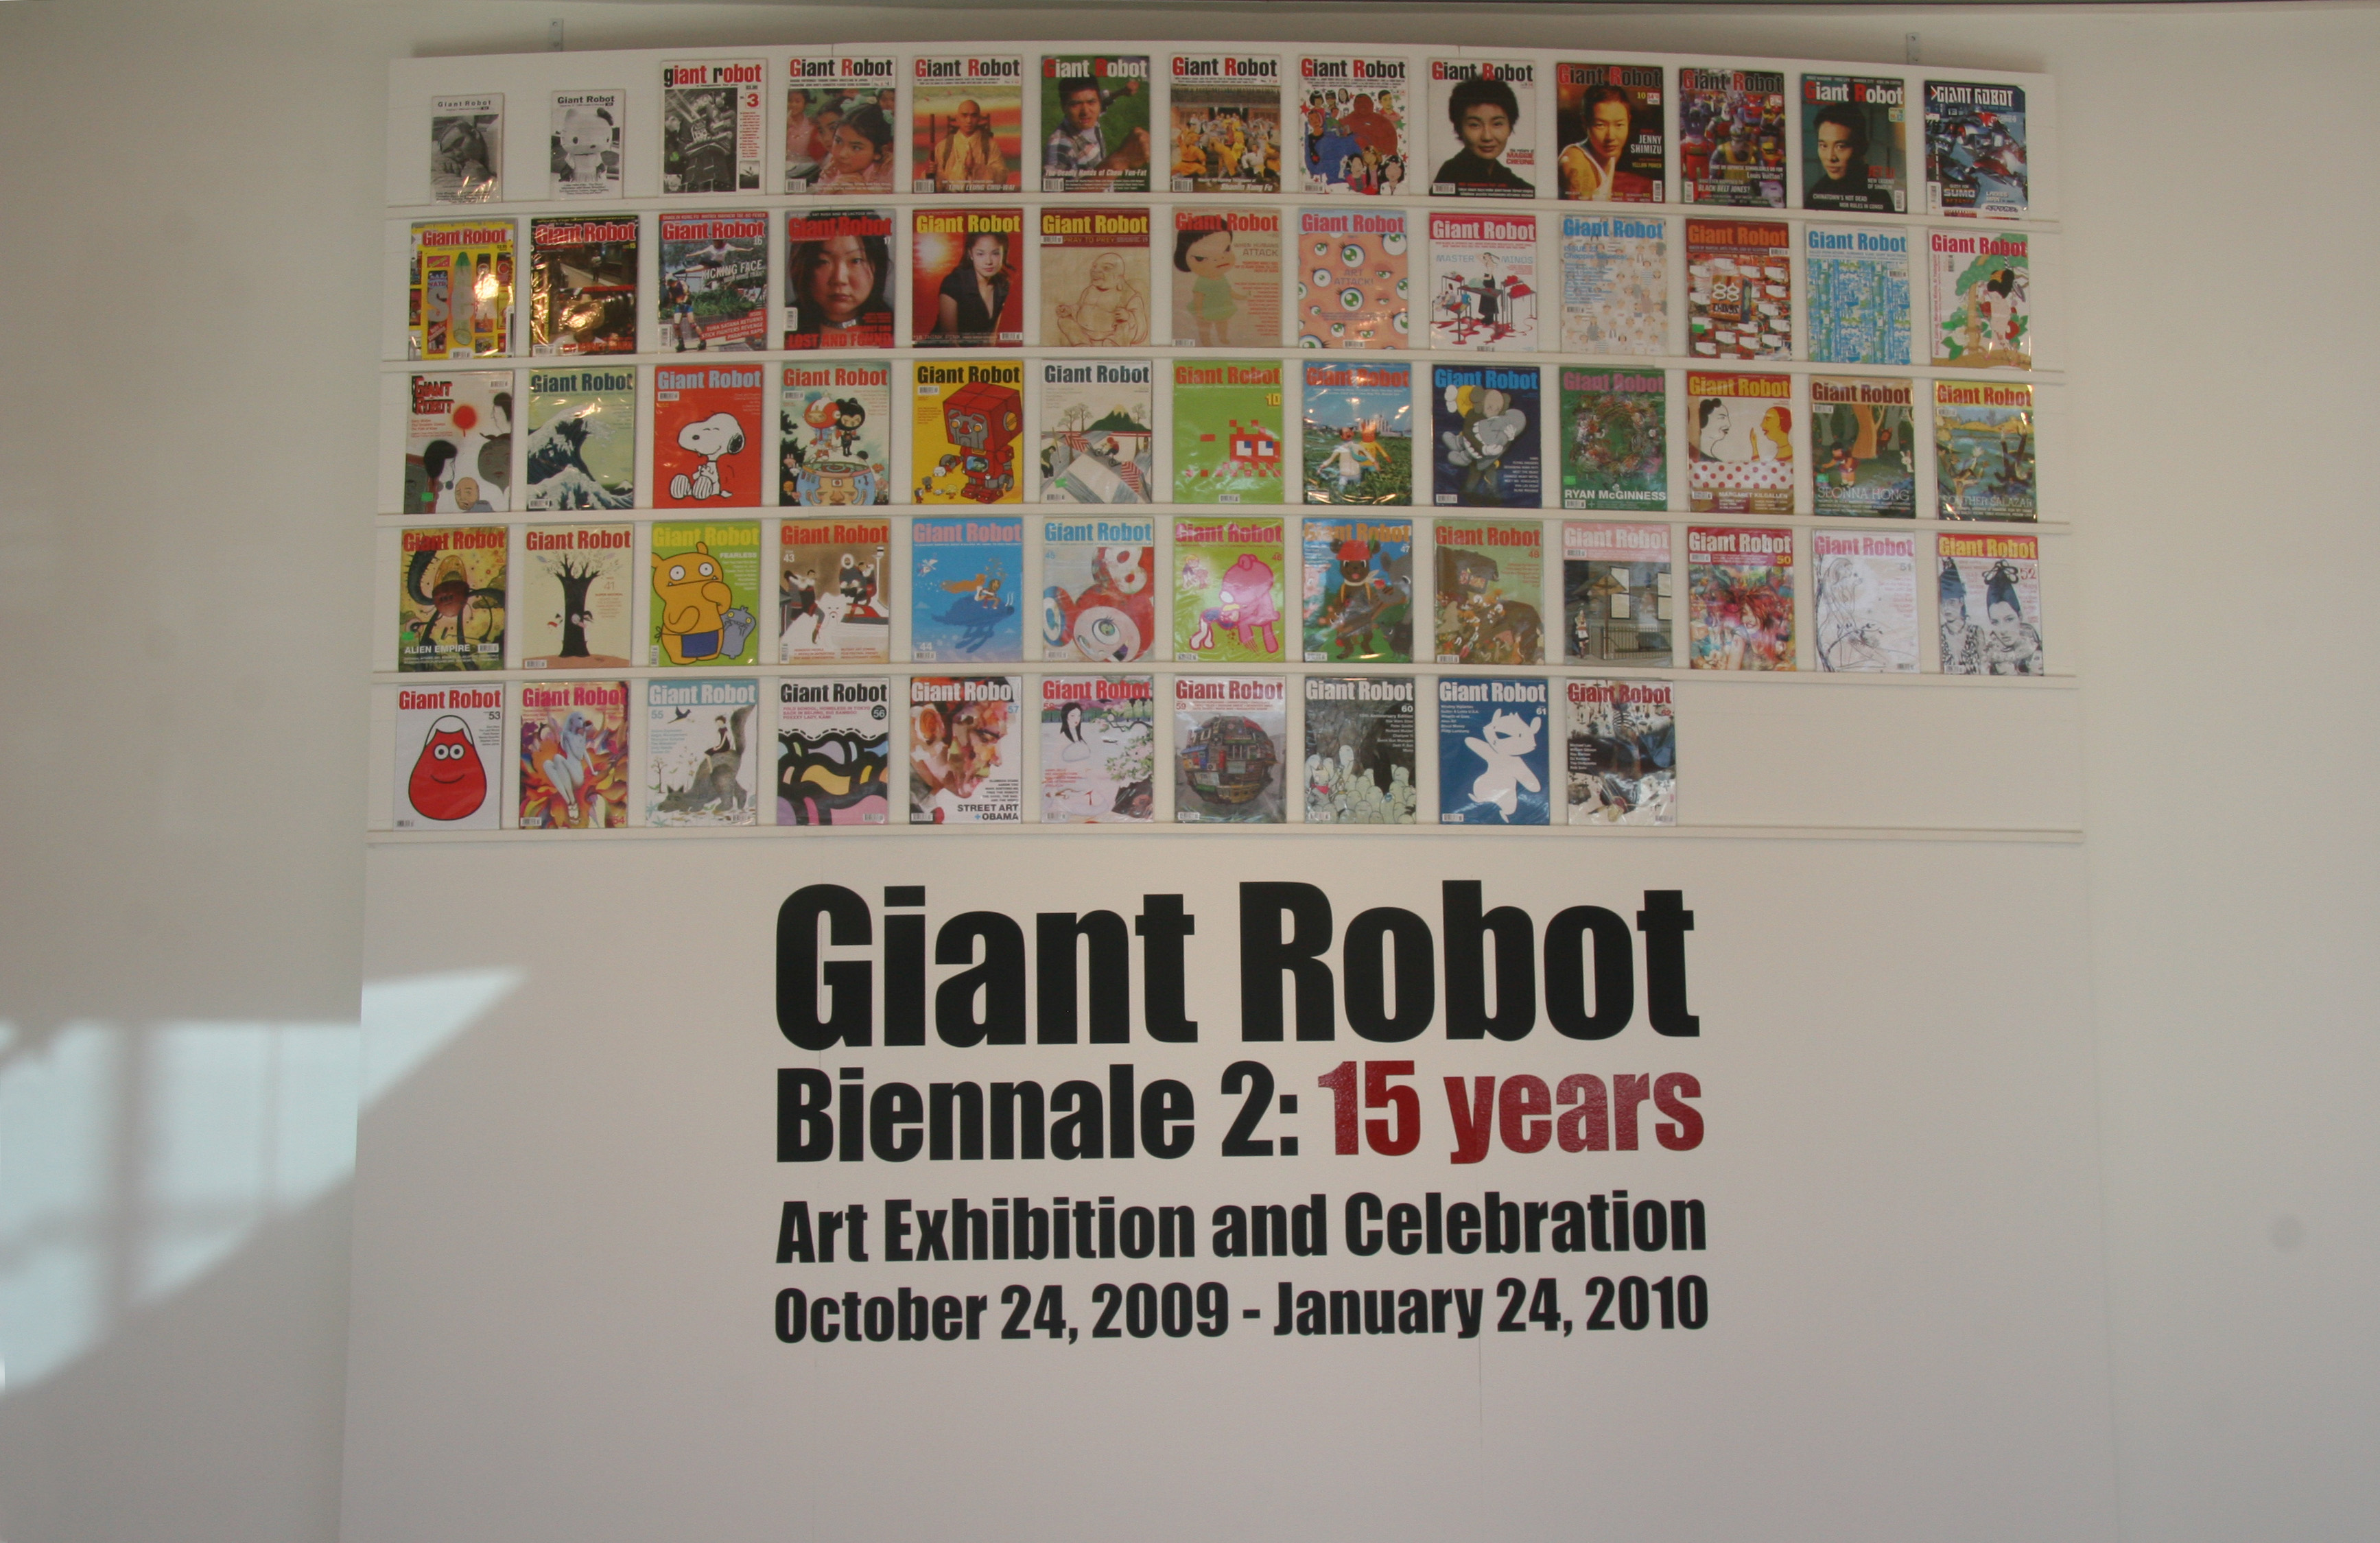 Press Photo Gallery Giant Robot Biennale 2 15 Years Japanese